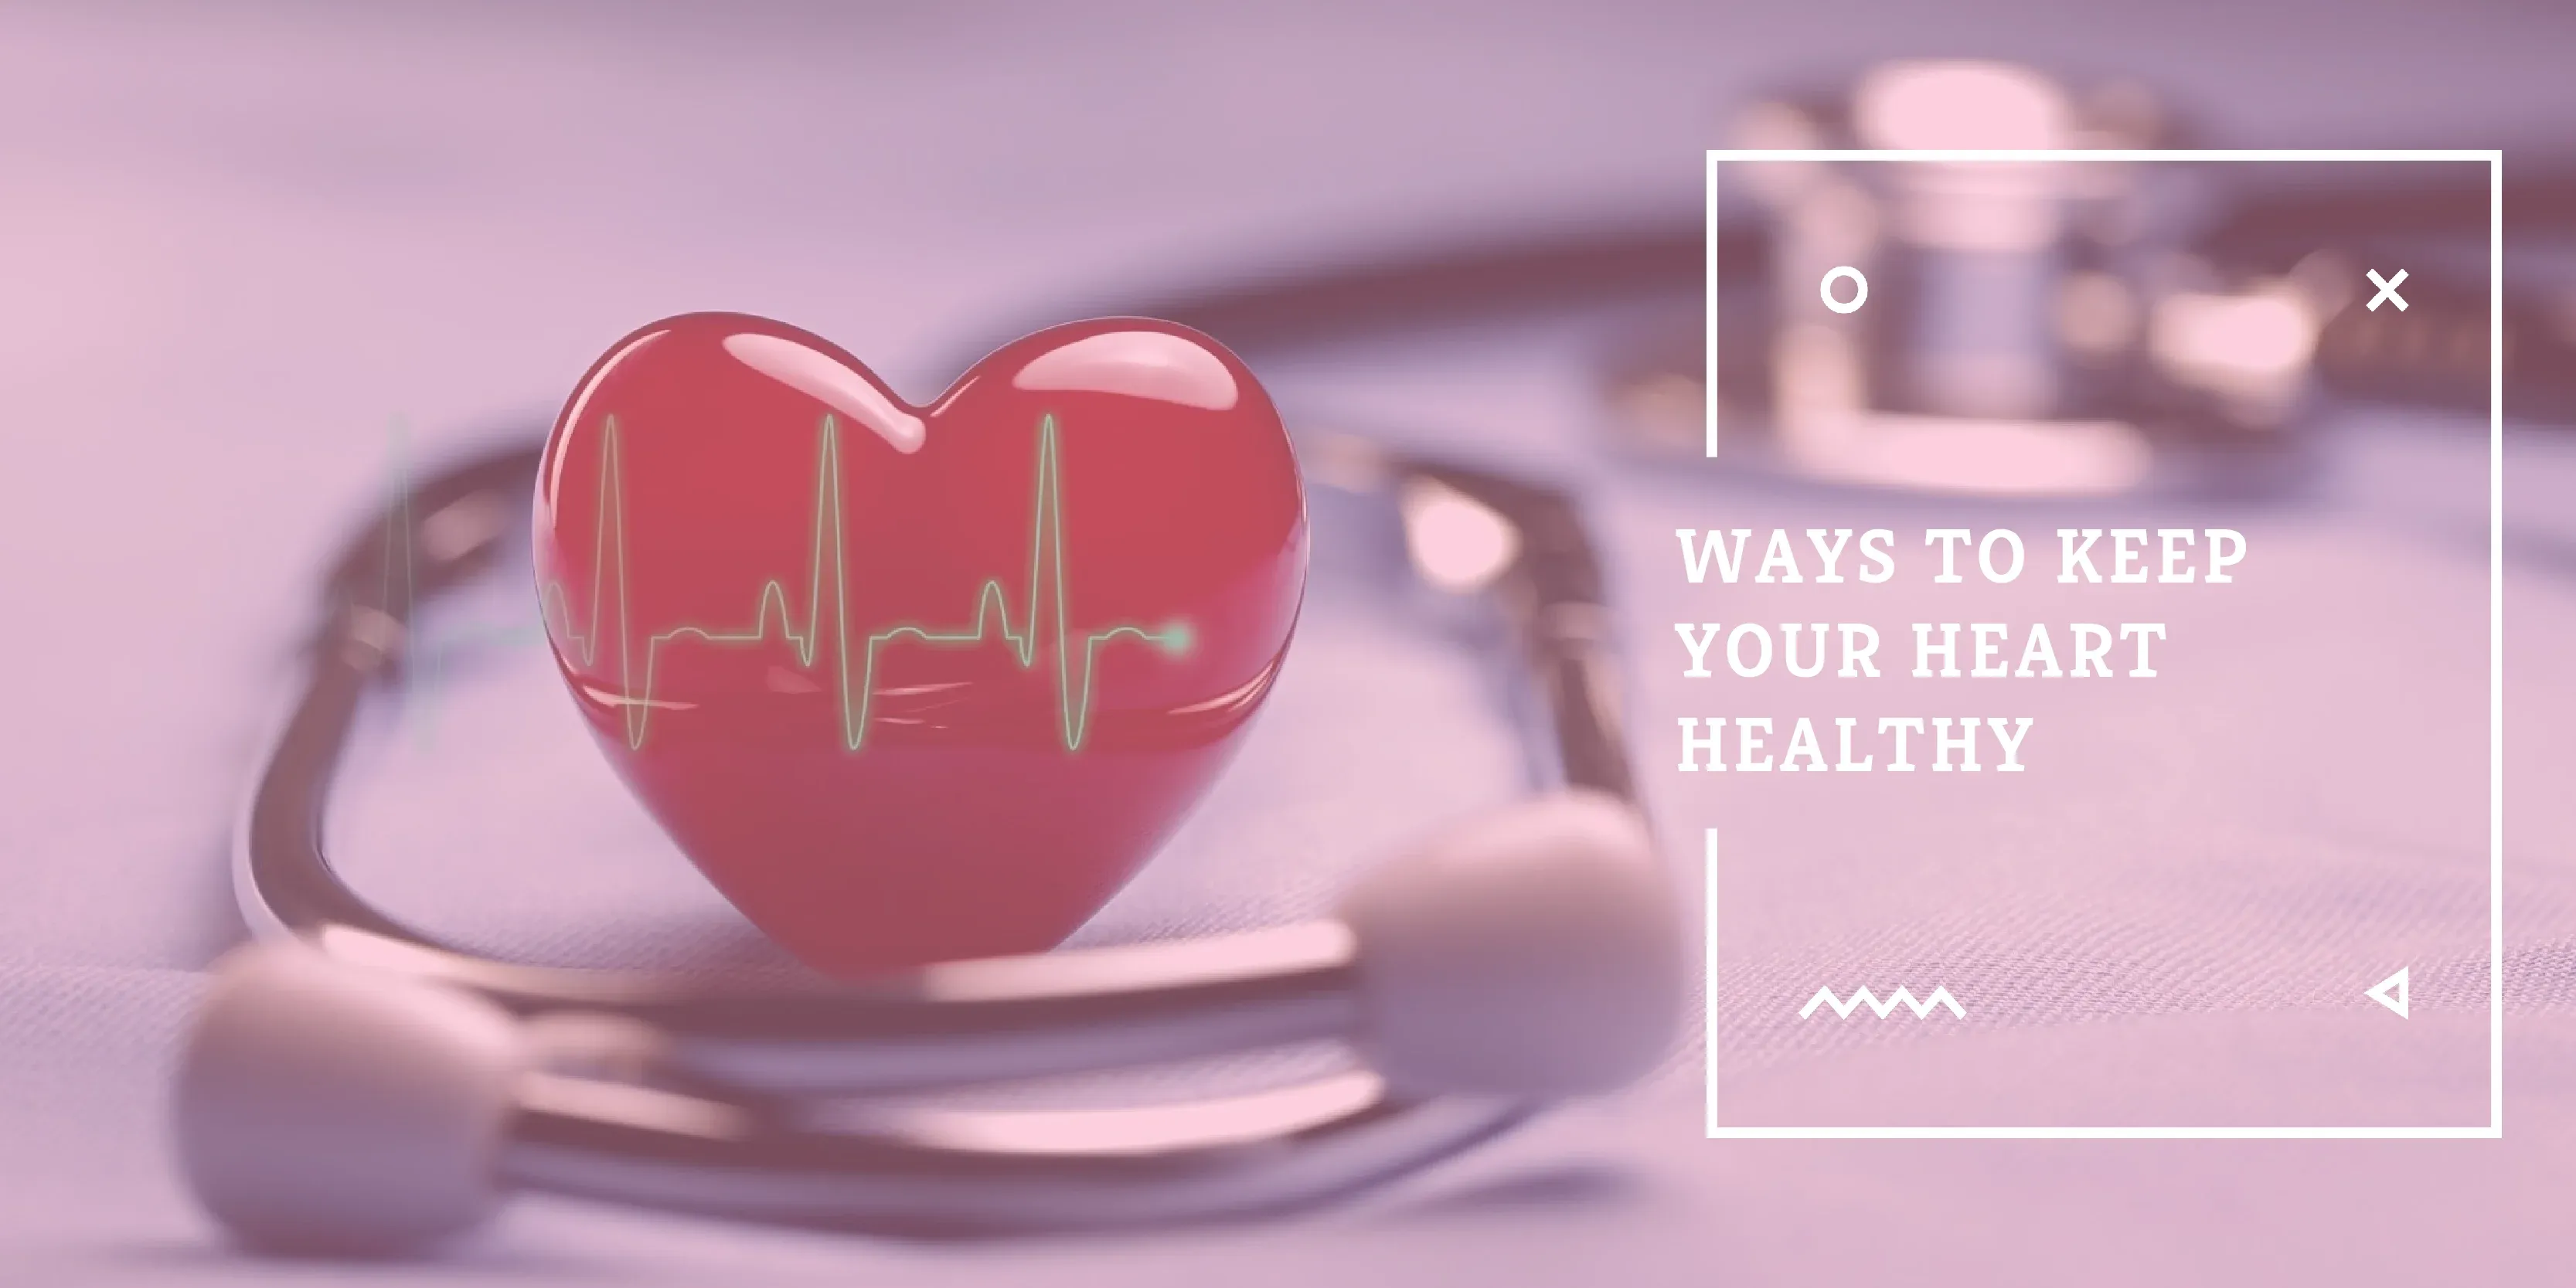 Tips For Heart Health